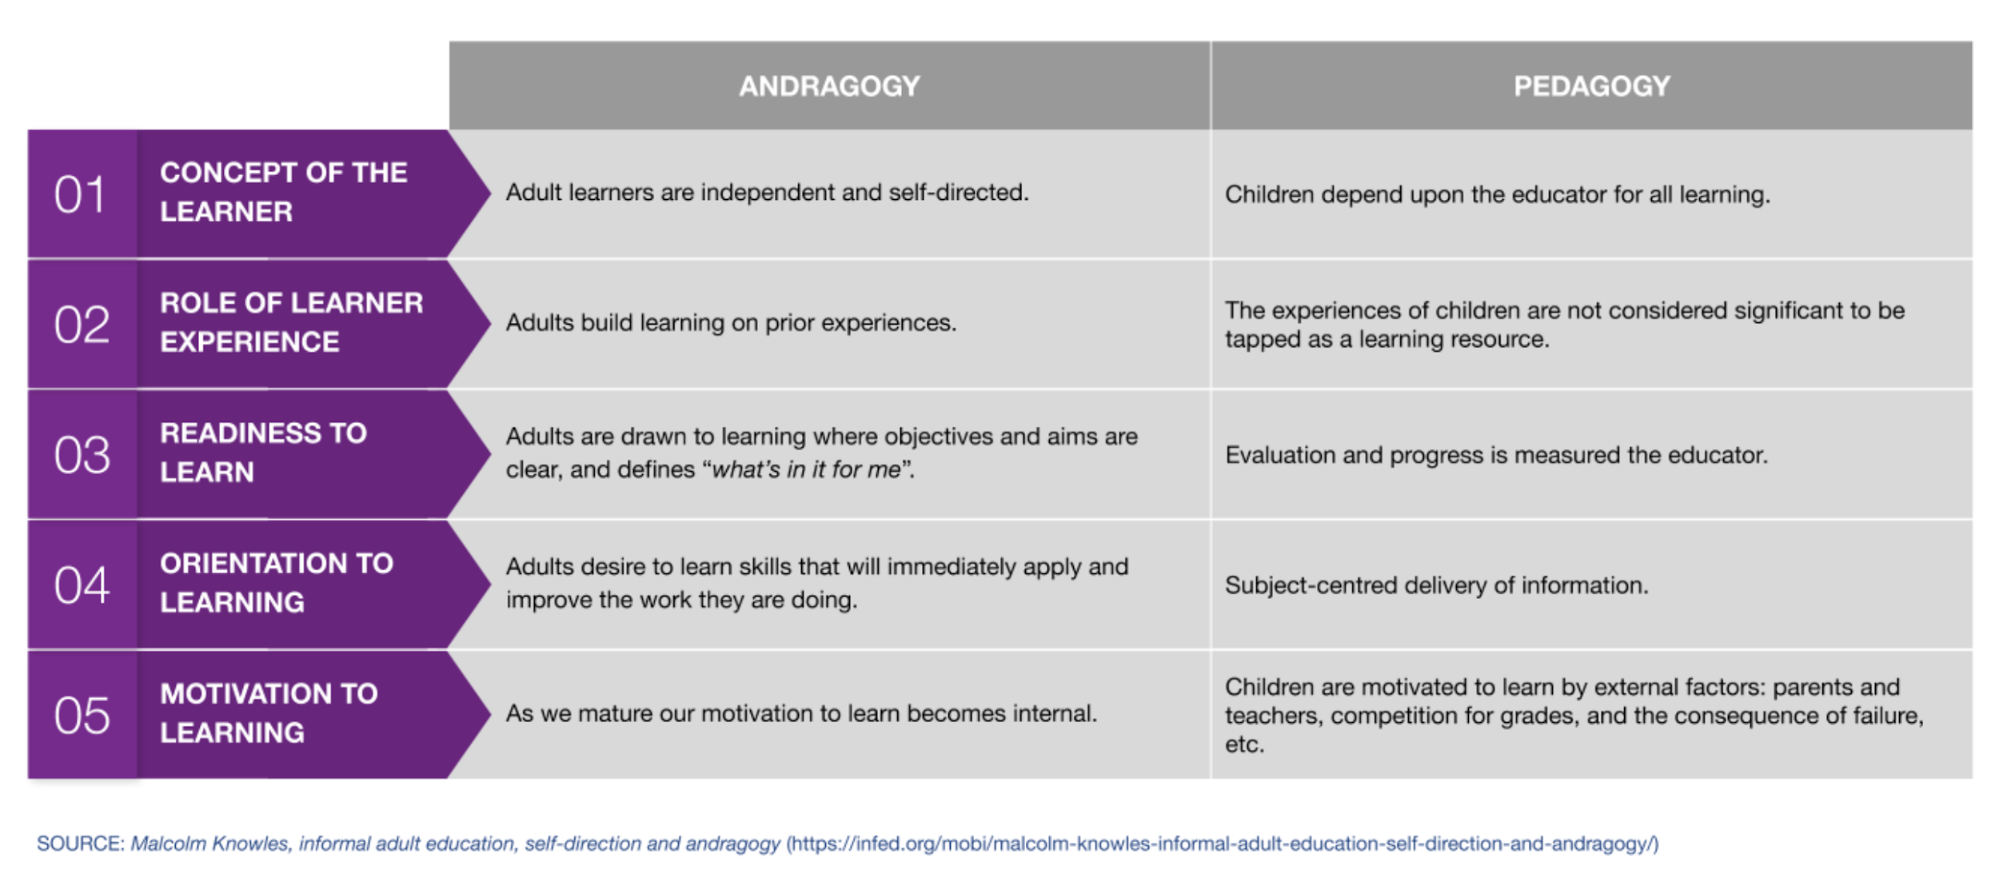 image chart pedagogy vs andragogy 5 assumptions